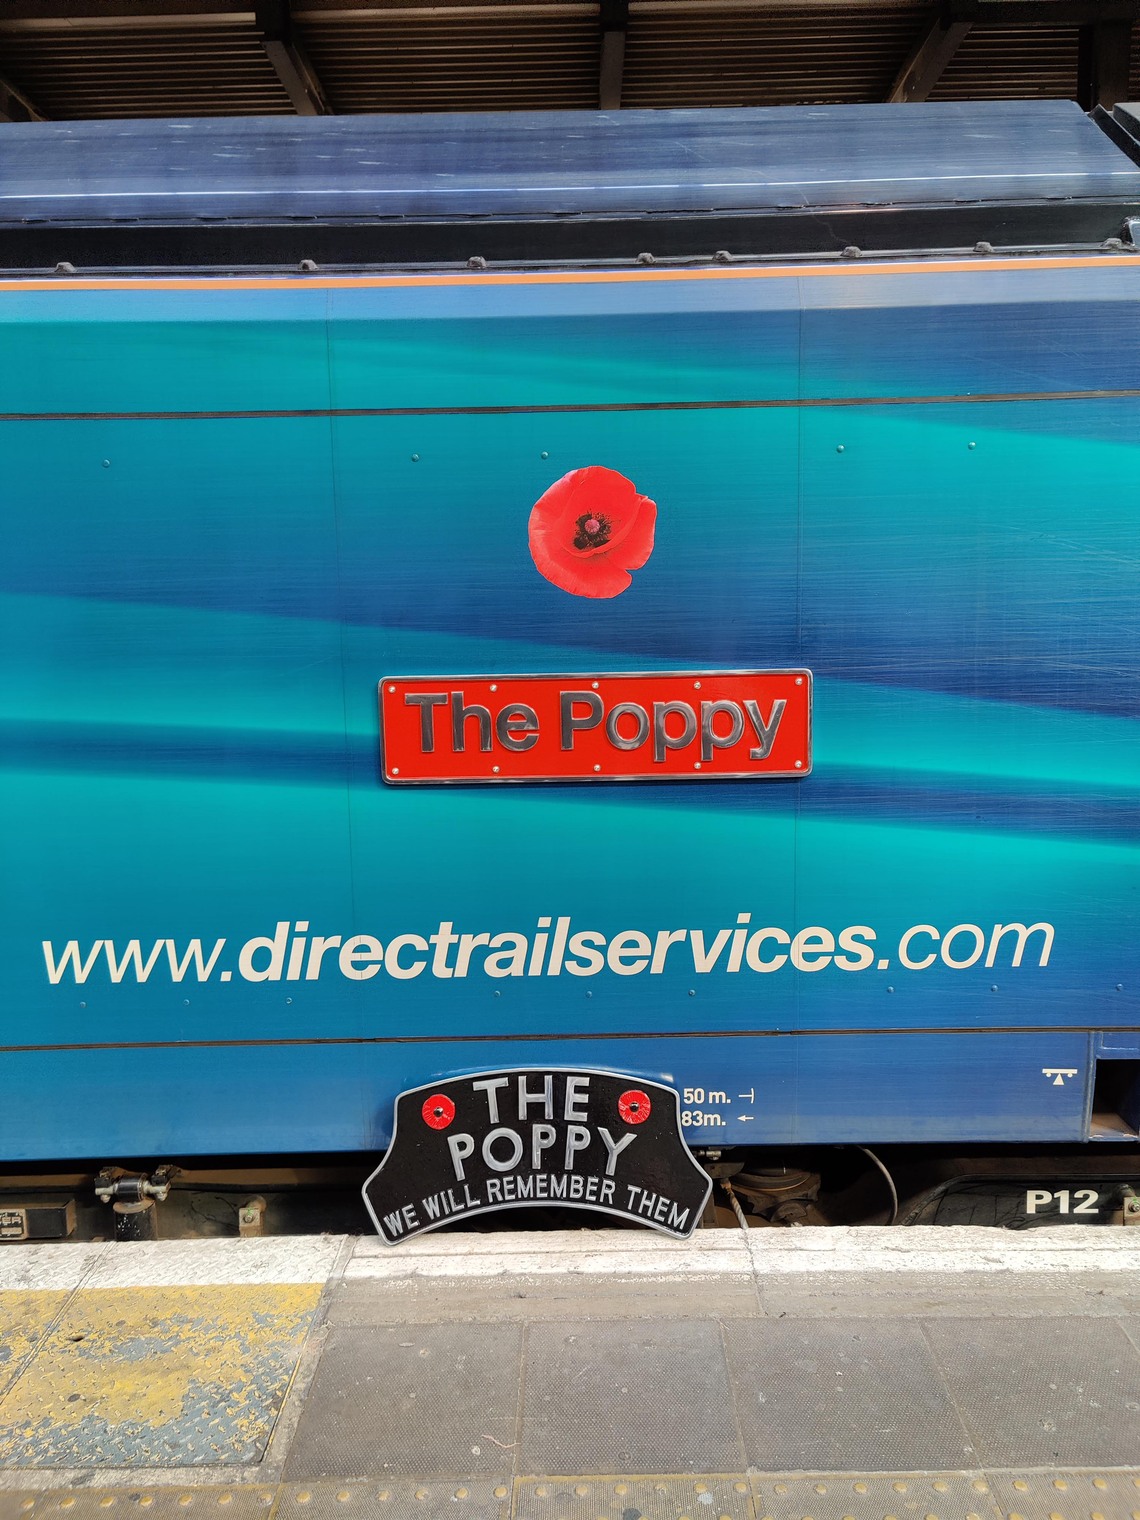 The Poppy, nameplate and headboard